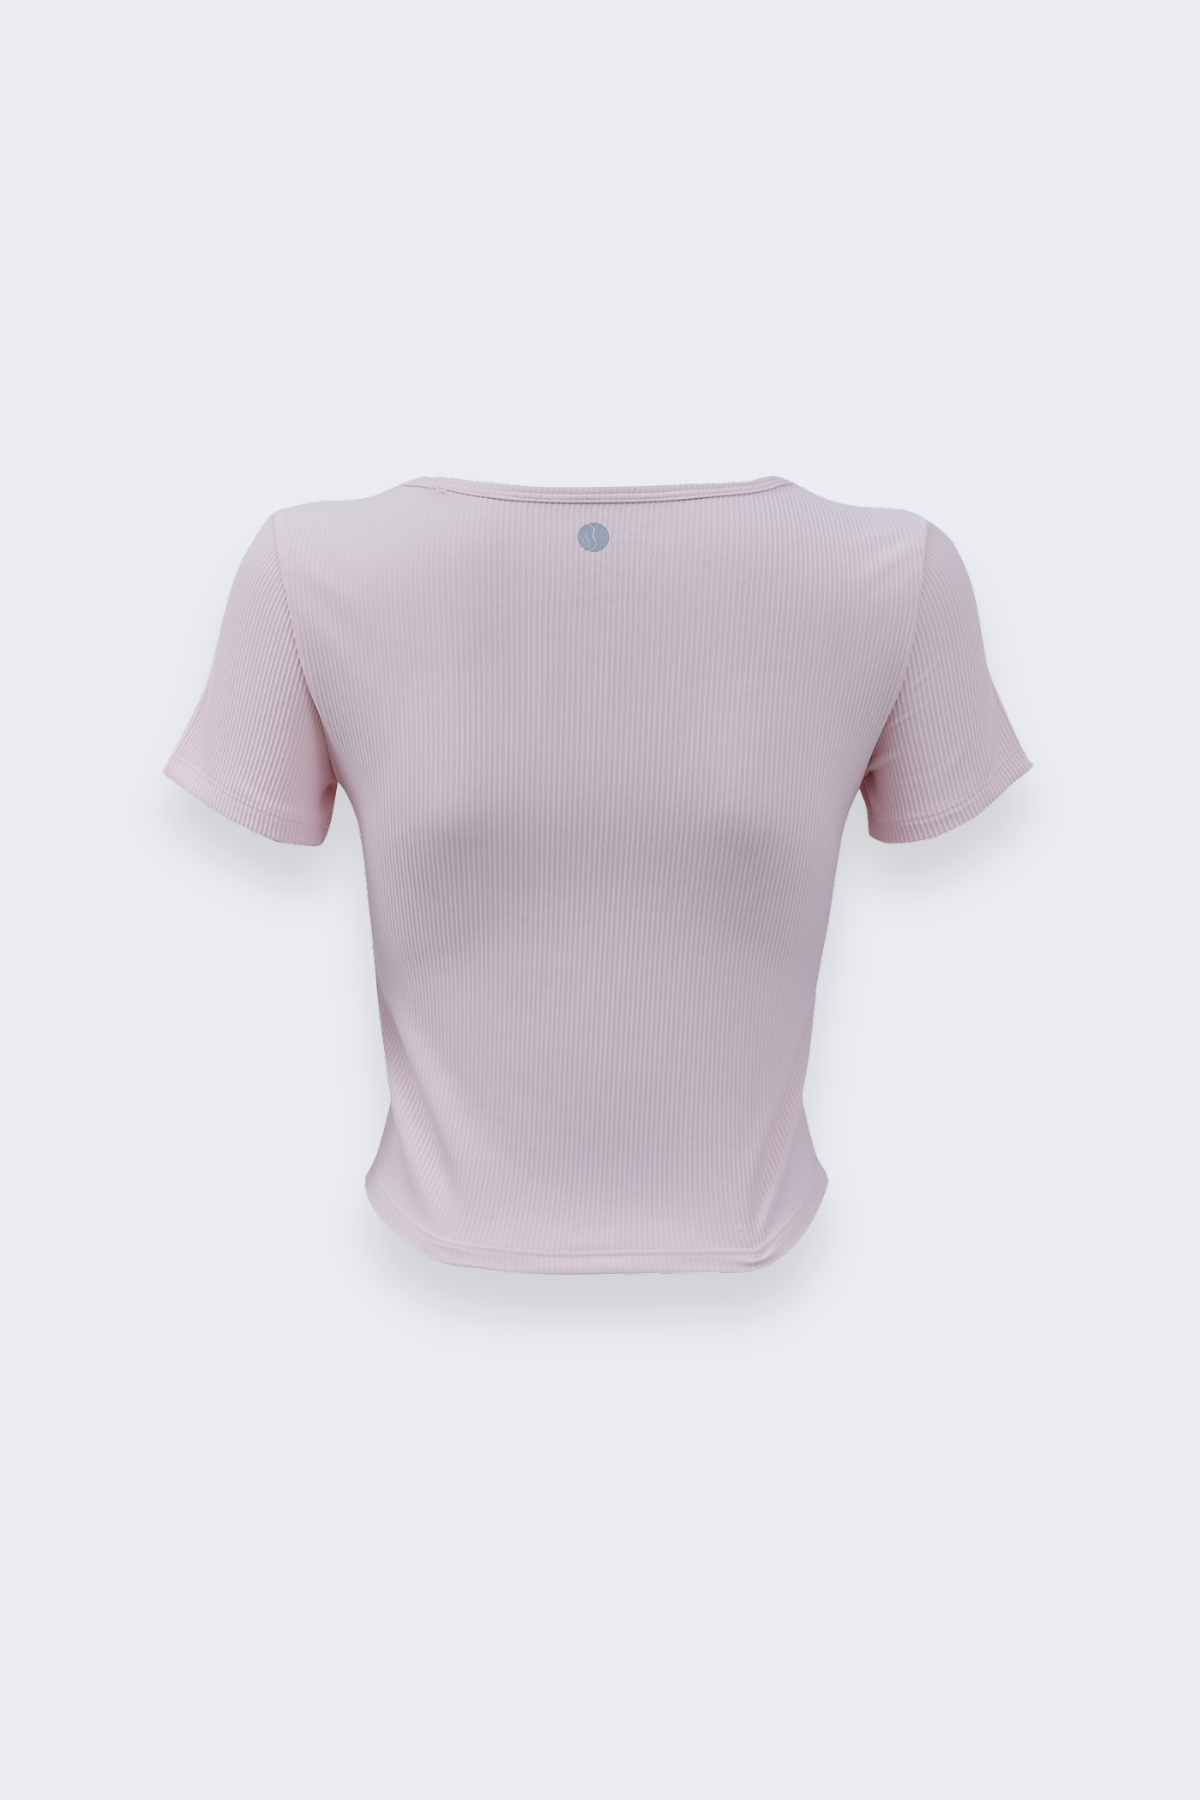 Libre Pink Knit Top (1XS LEFT)